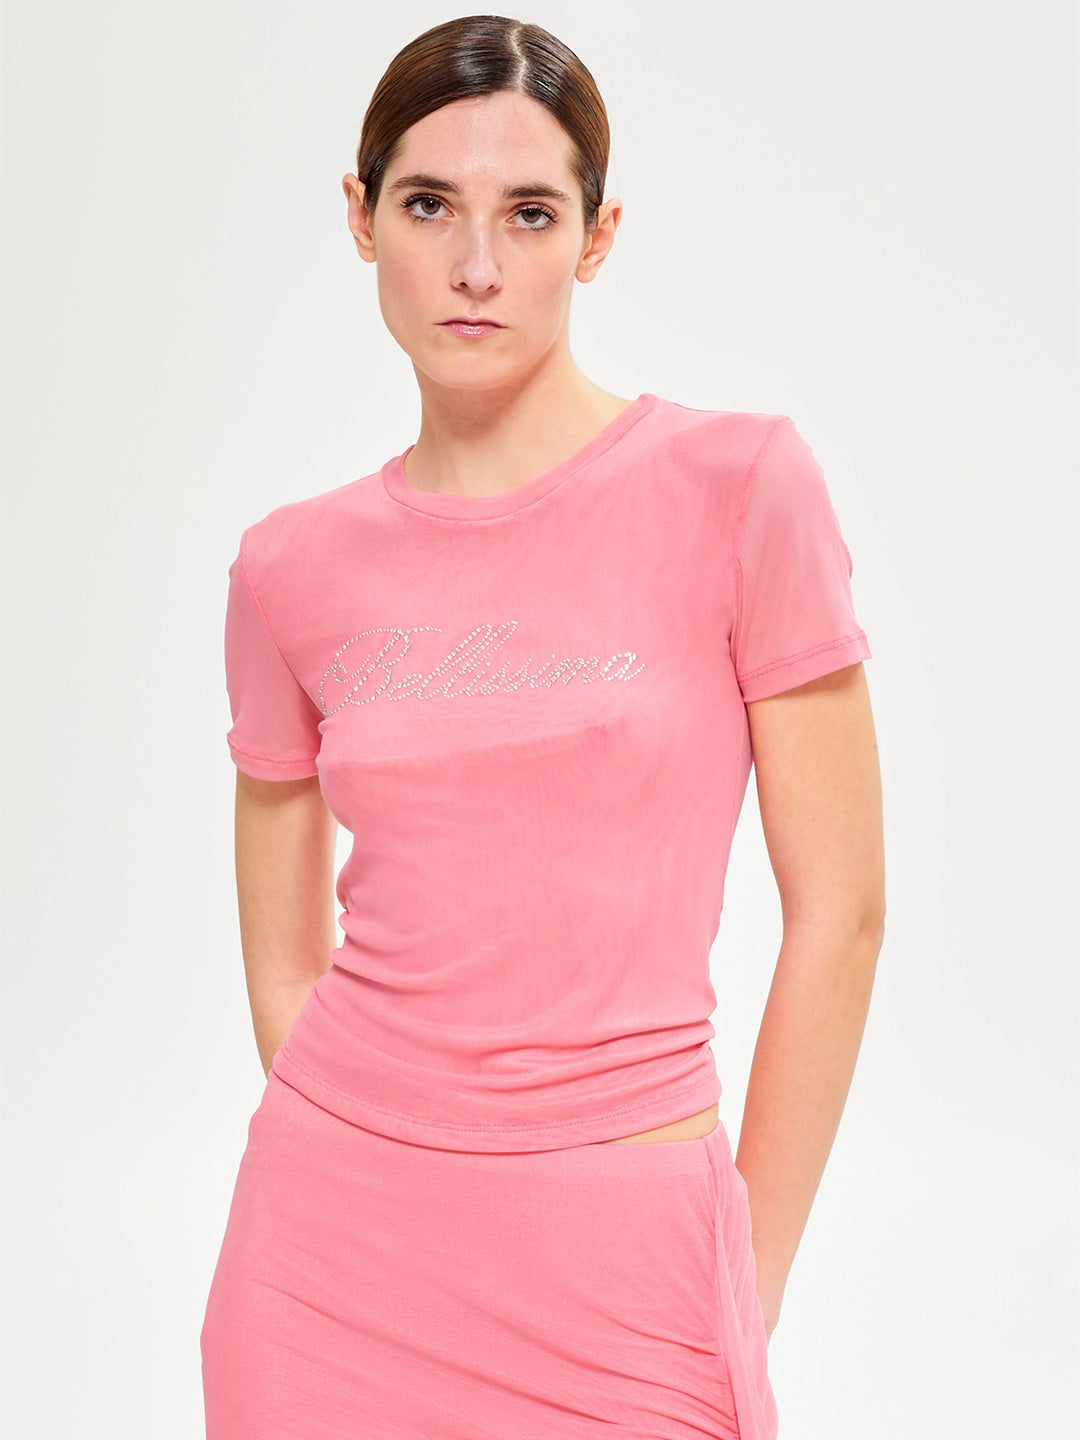 Lumina t-shirt rosa con stampa bellissima in strass